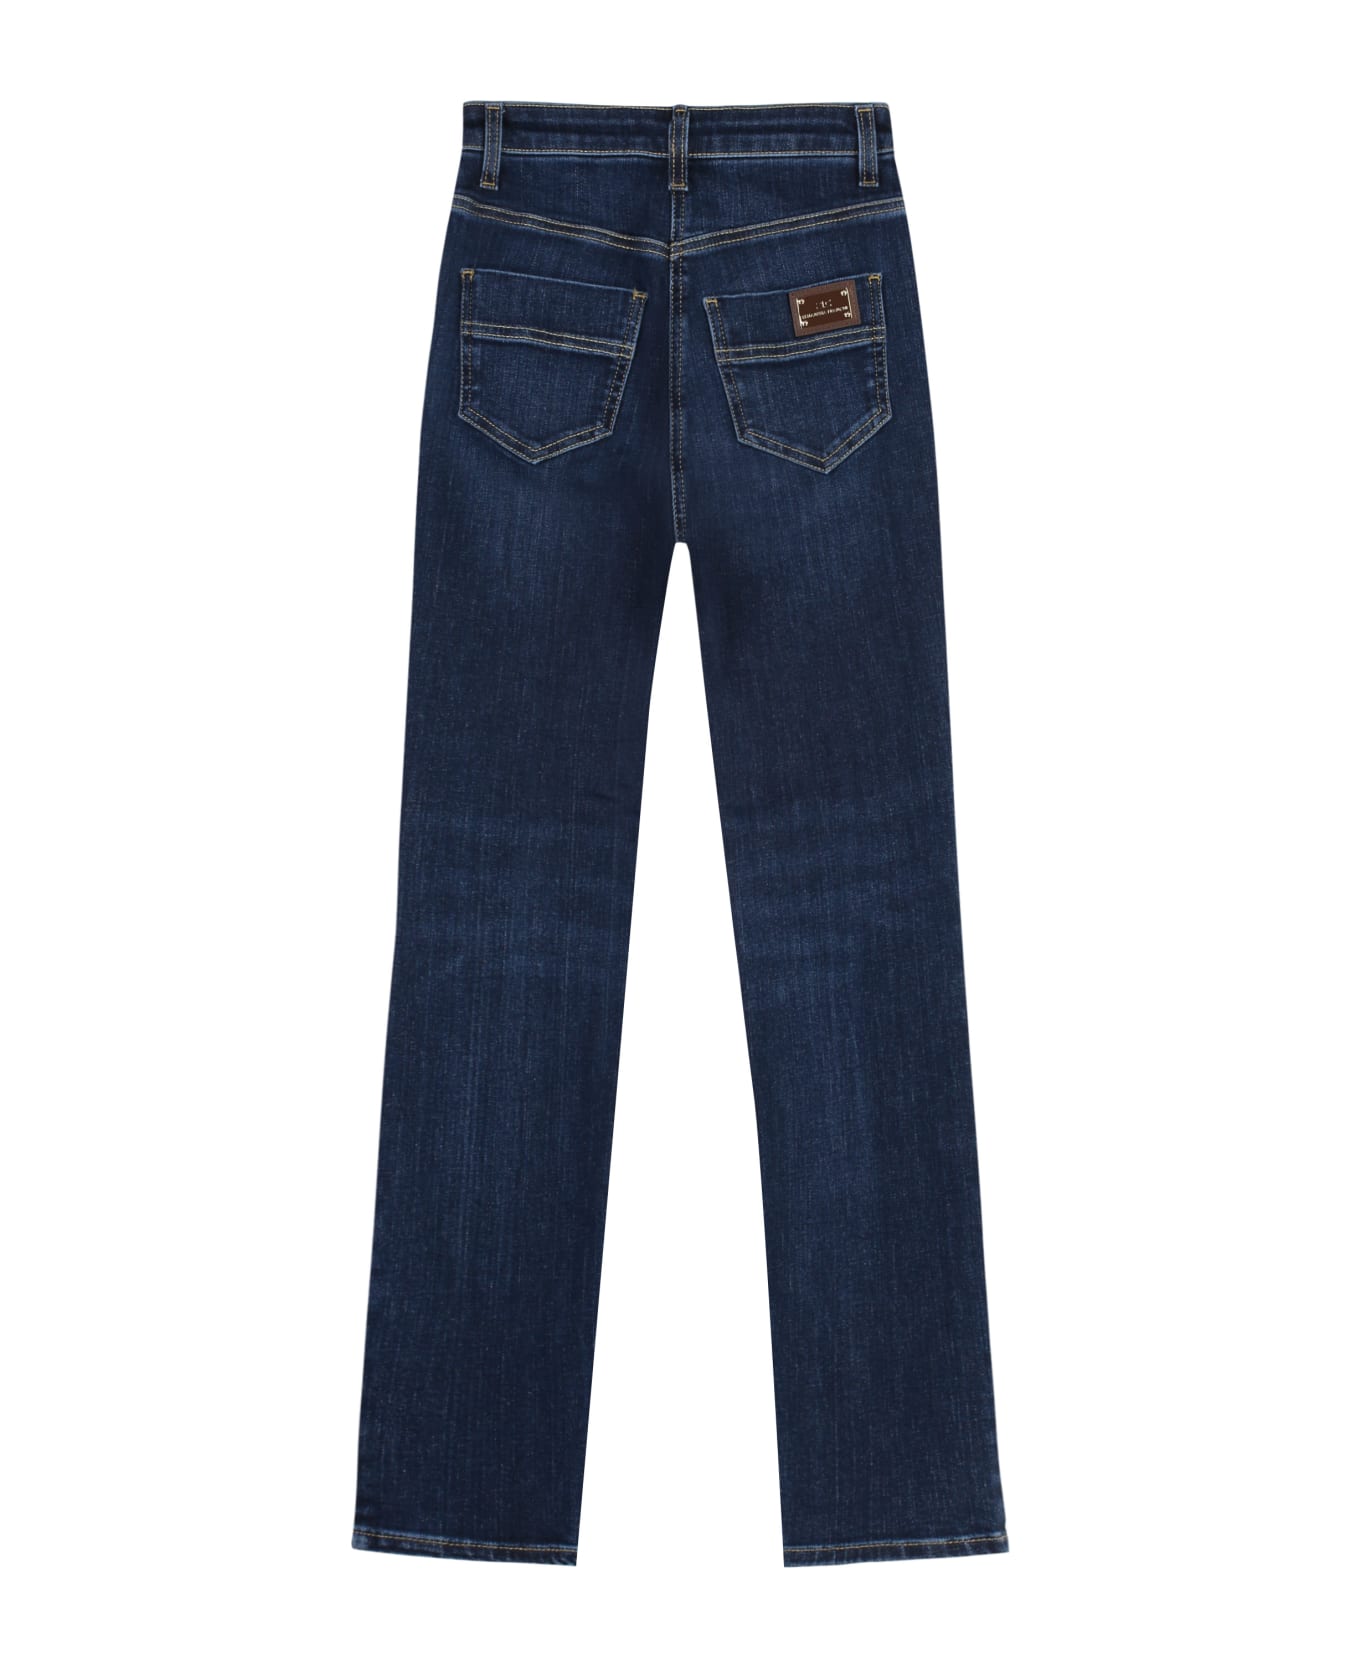 Elisabetta Franchi 5-pocket Skinny Jeans - Denim